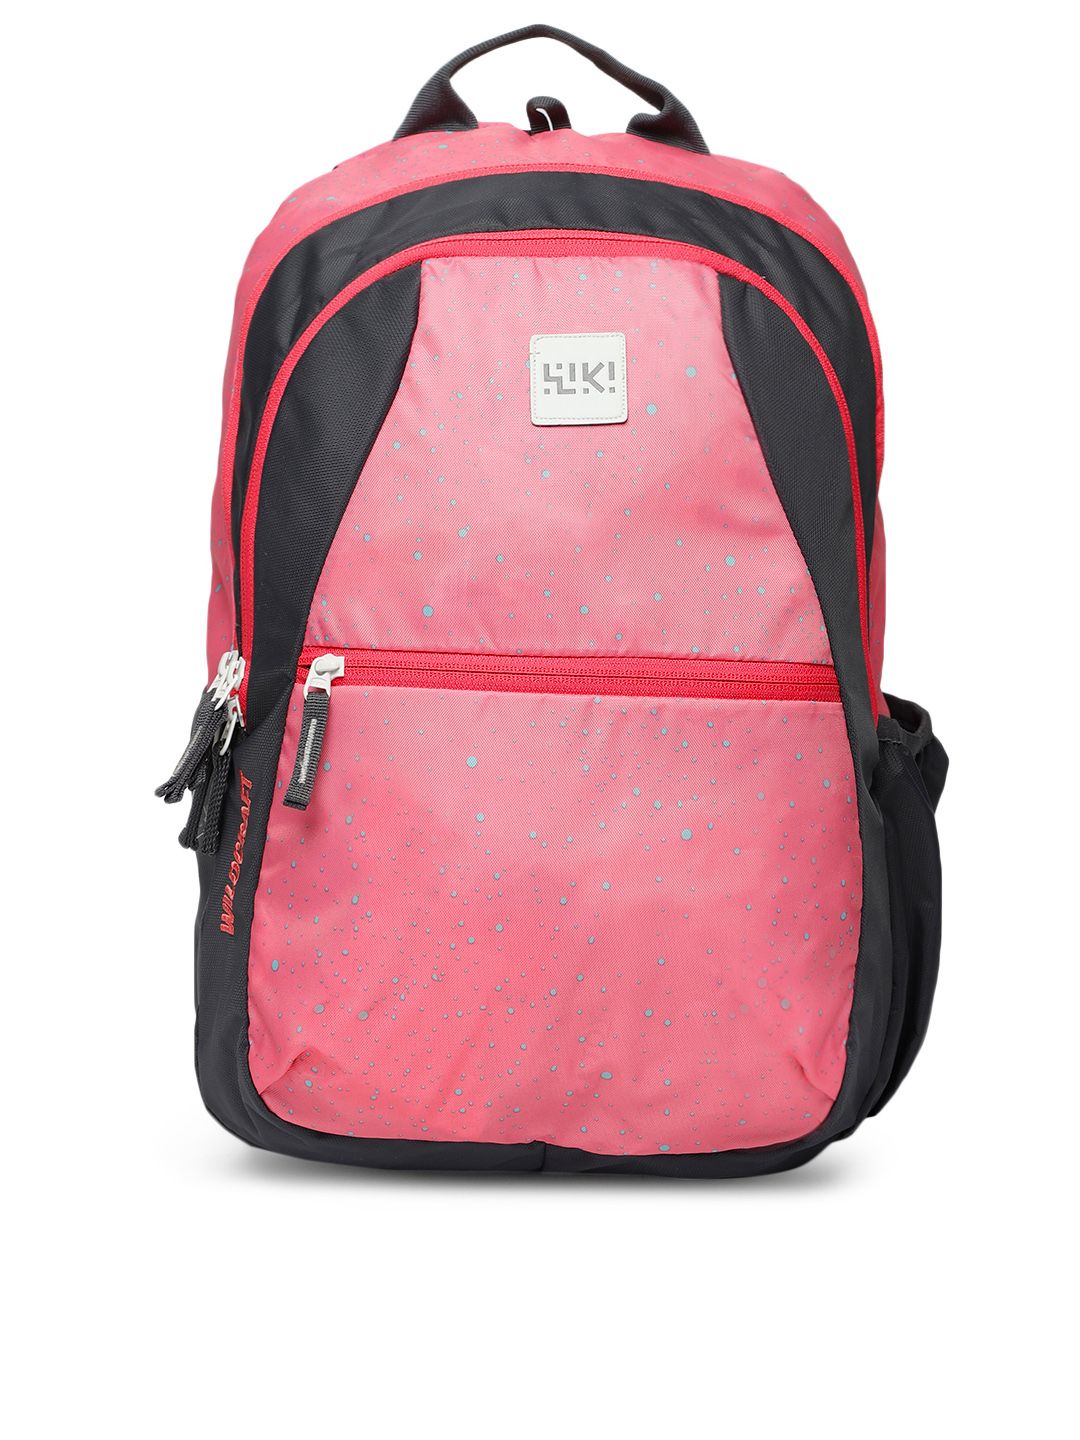 Wildcraft Unisex Pink Printed Backpack Price in India